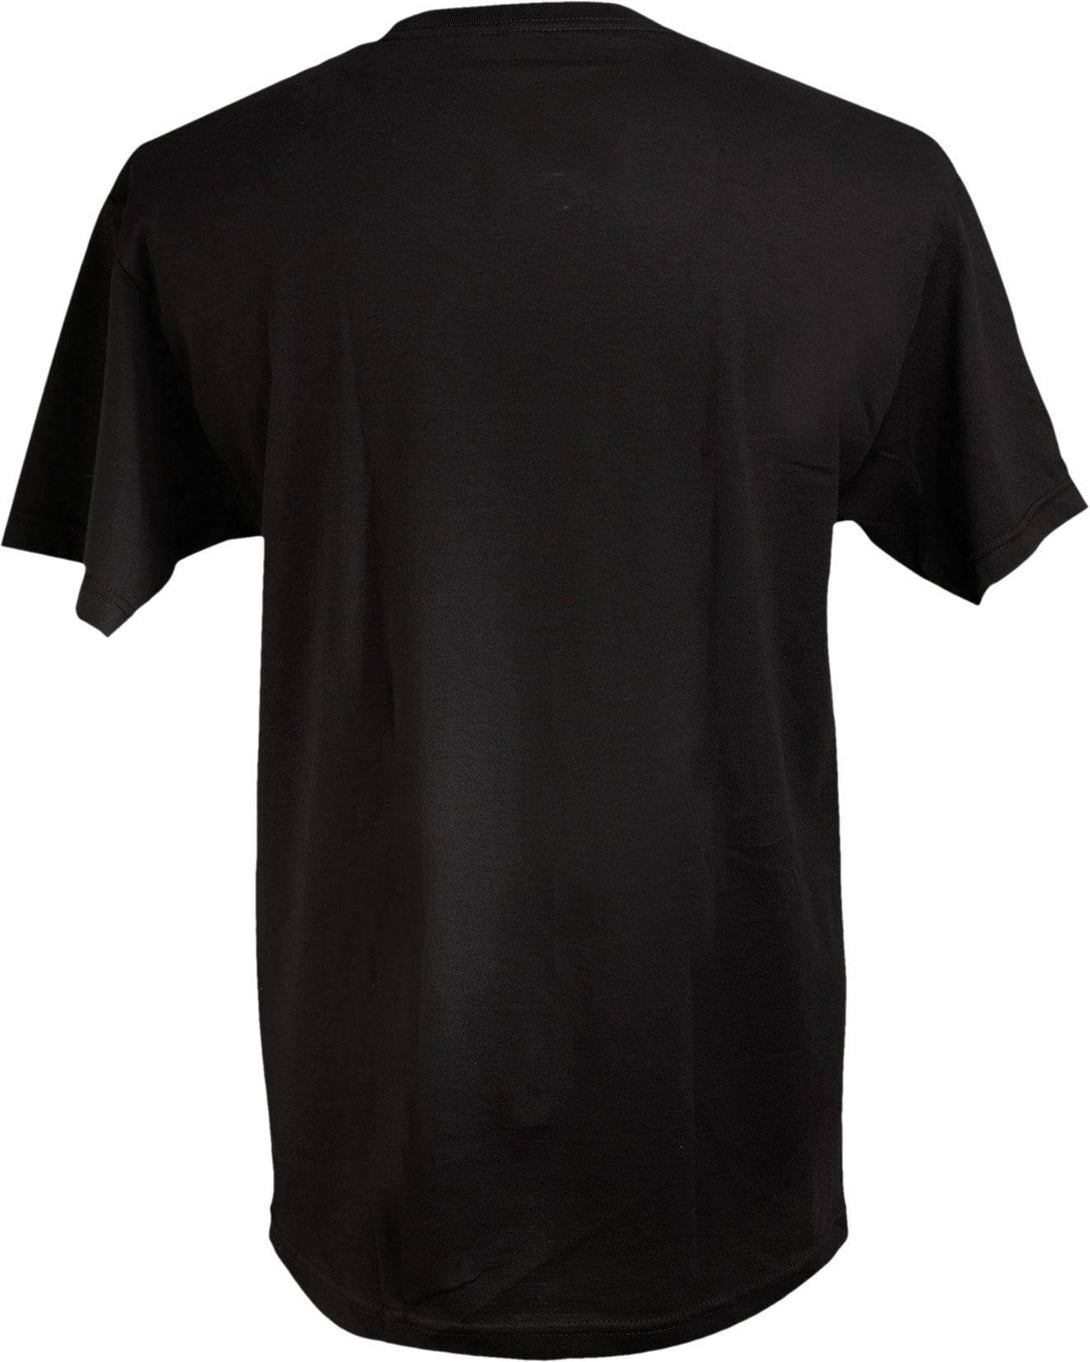 Phoenix mens fishing t-shirt black back